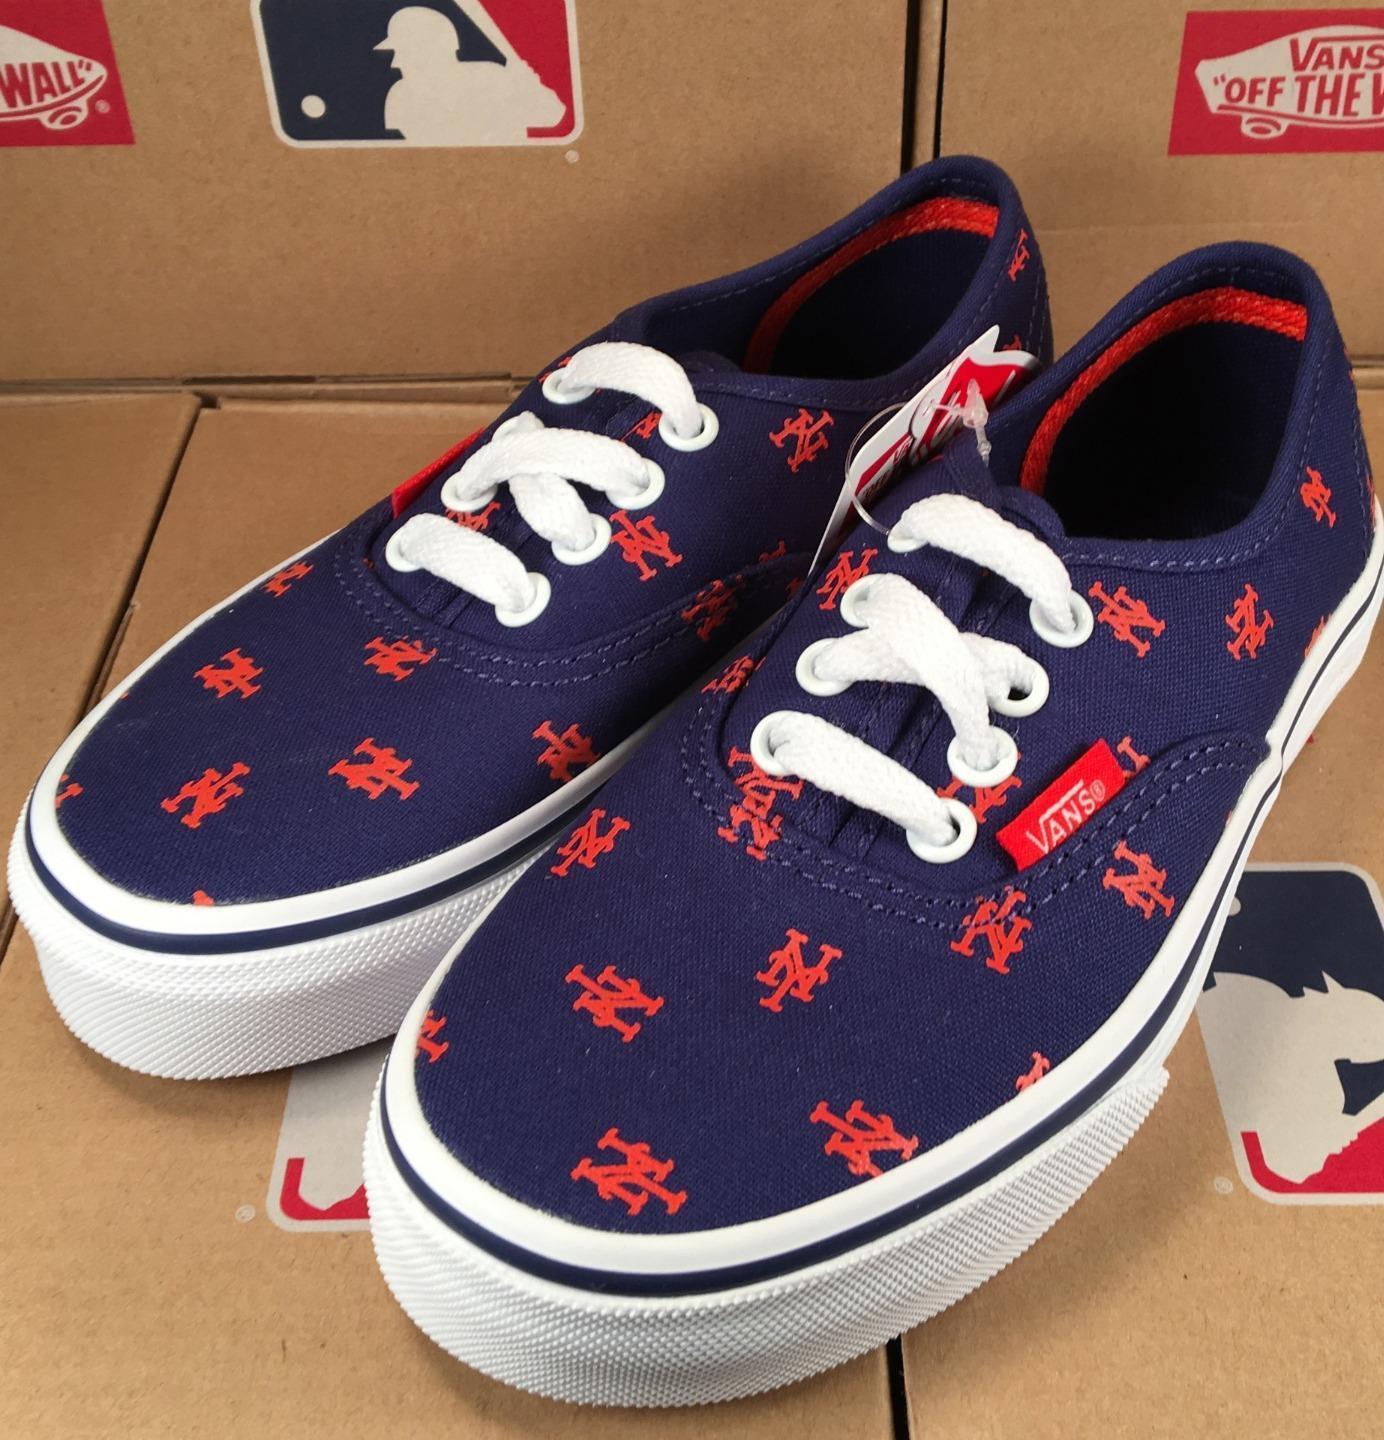 Download Vans KIDS New York Mets MLB Authentic Sneaker Limited ...